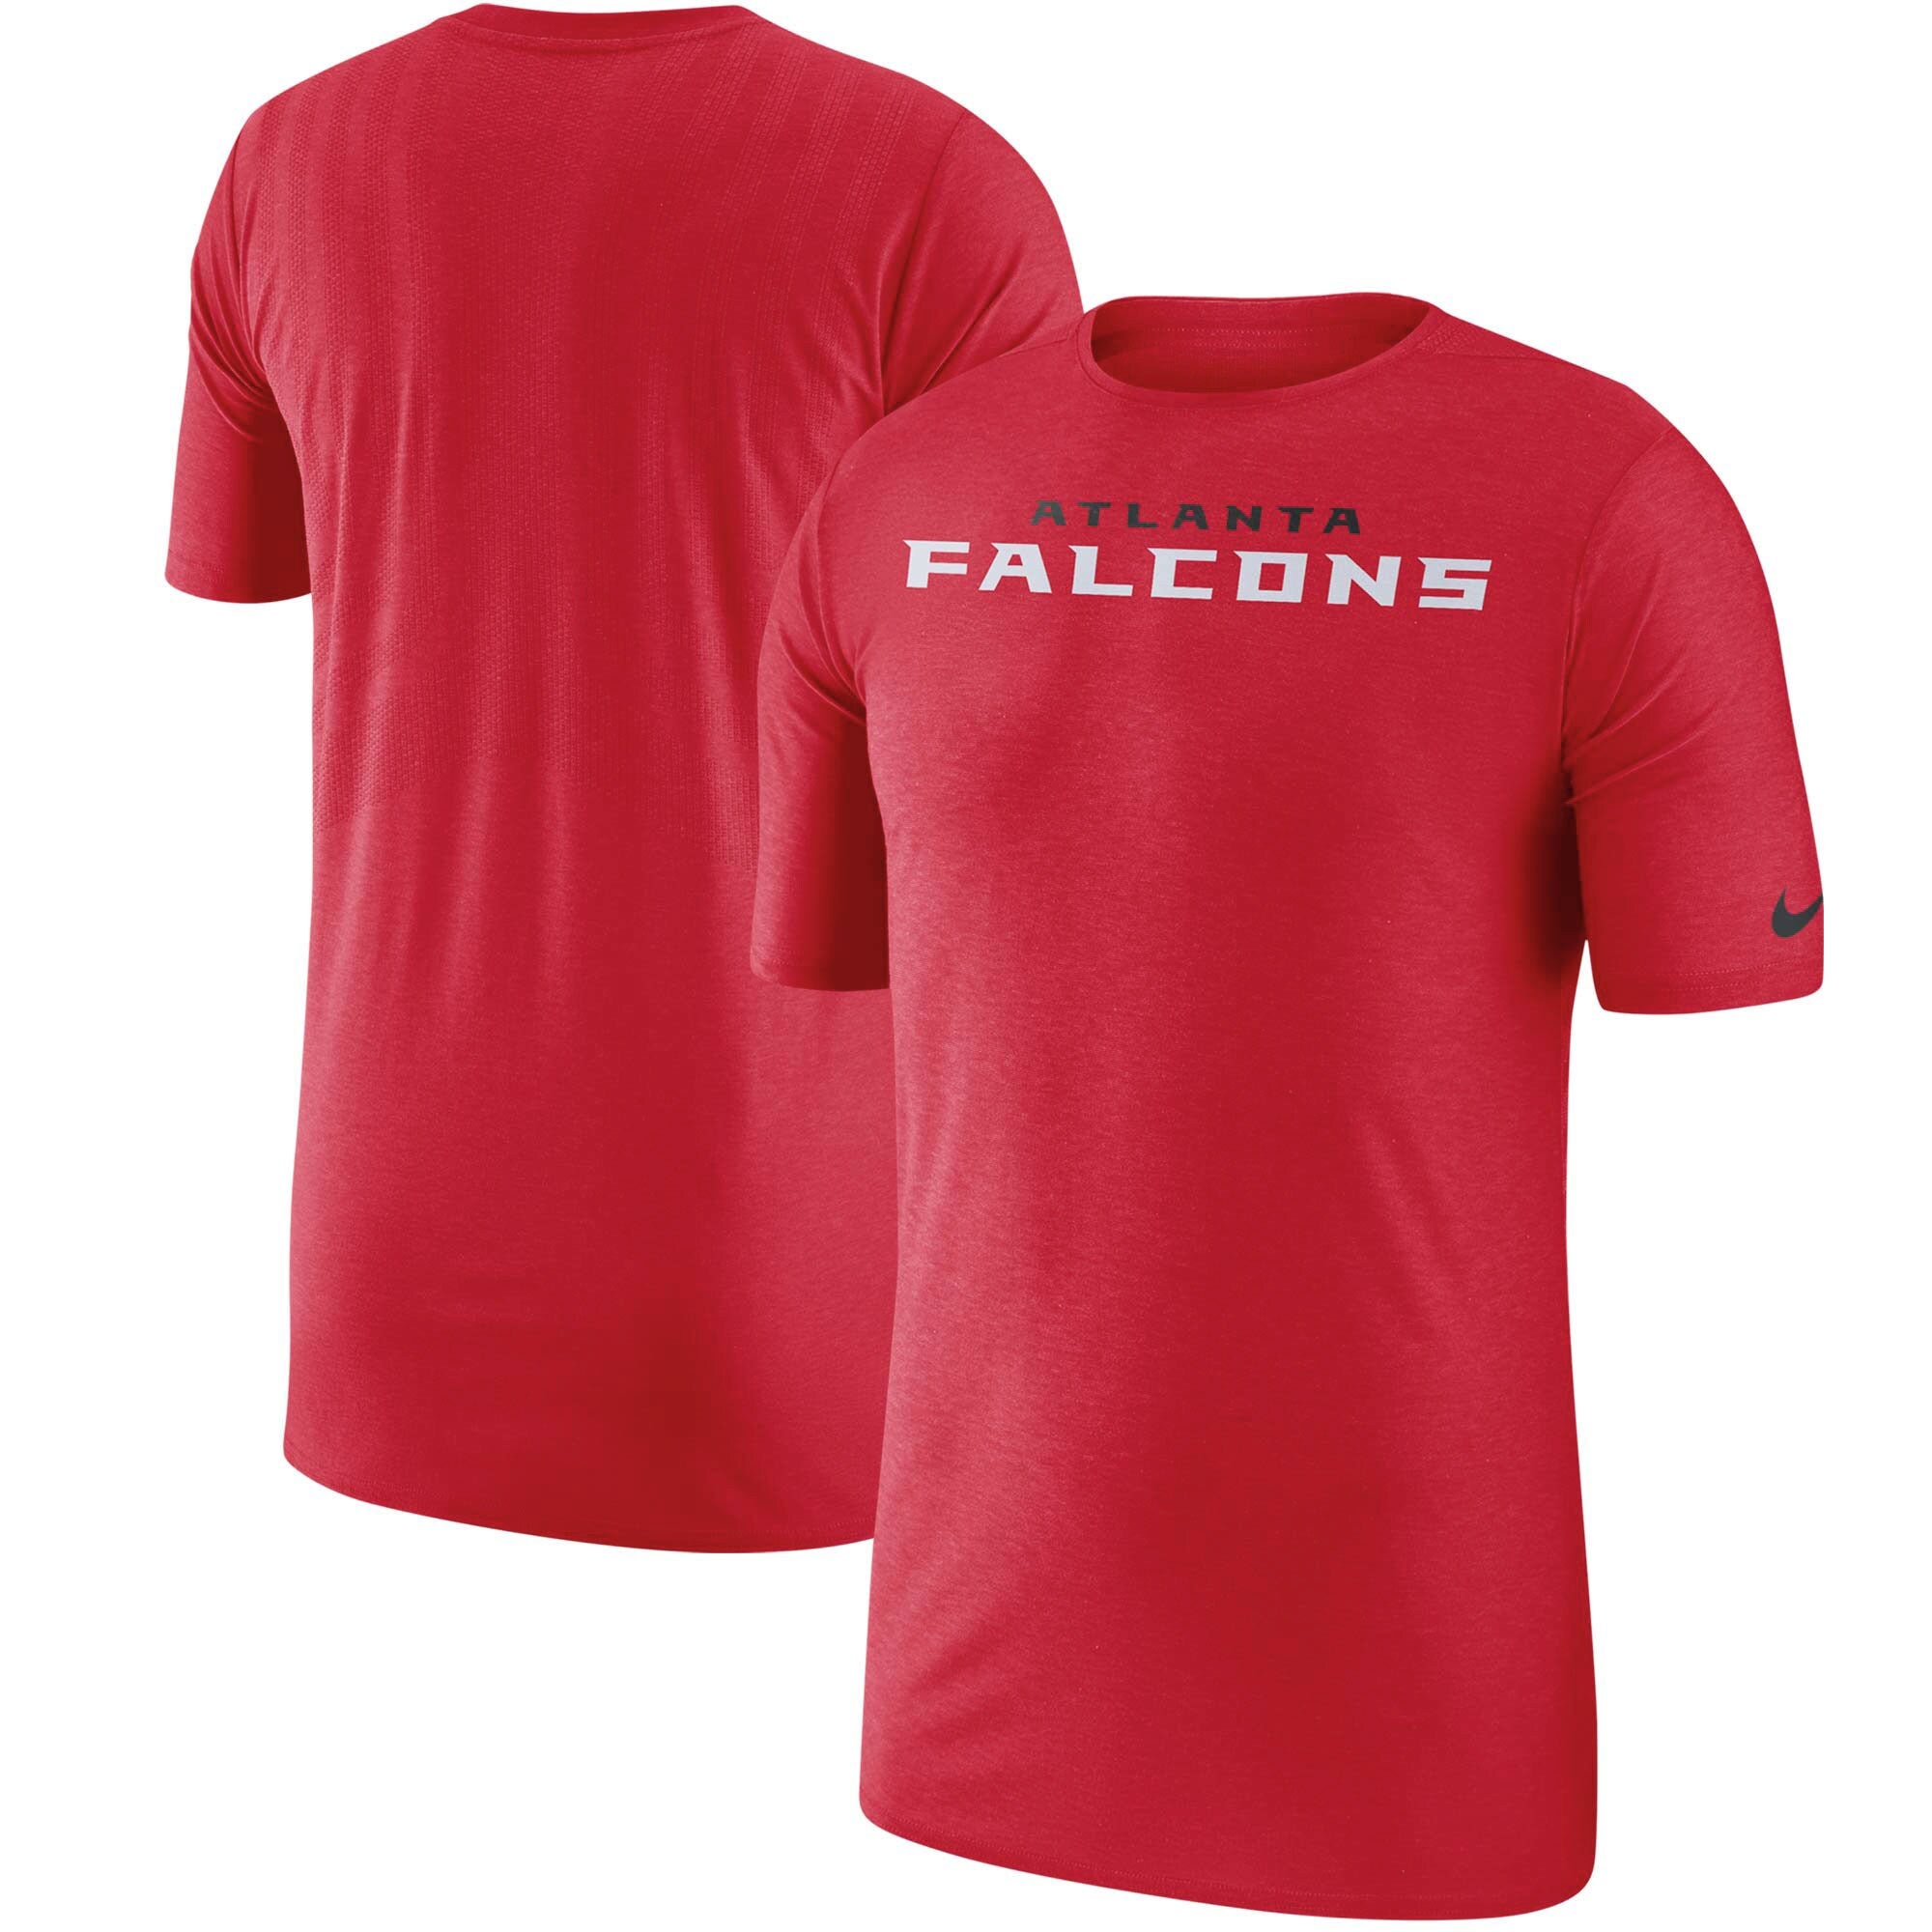 Nike Falcons Sideline T-Shirt - Men's